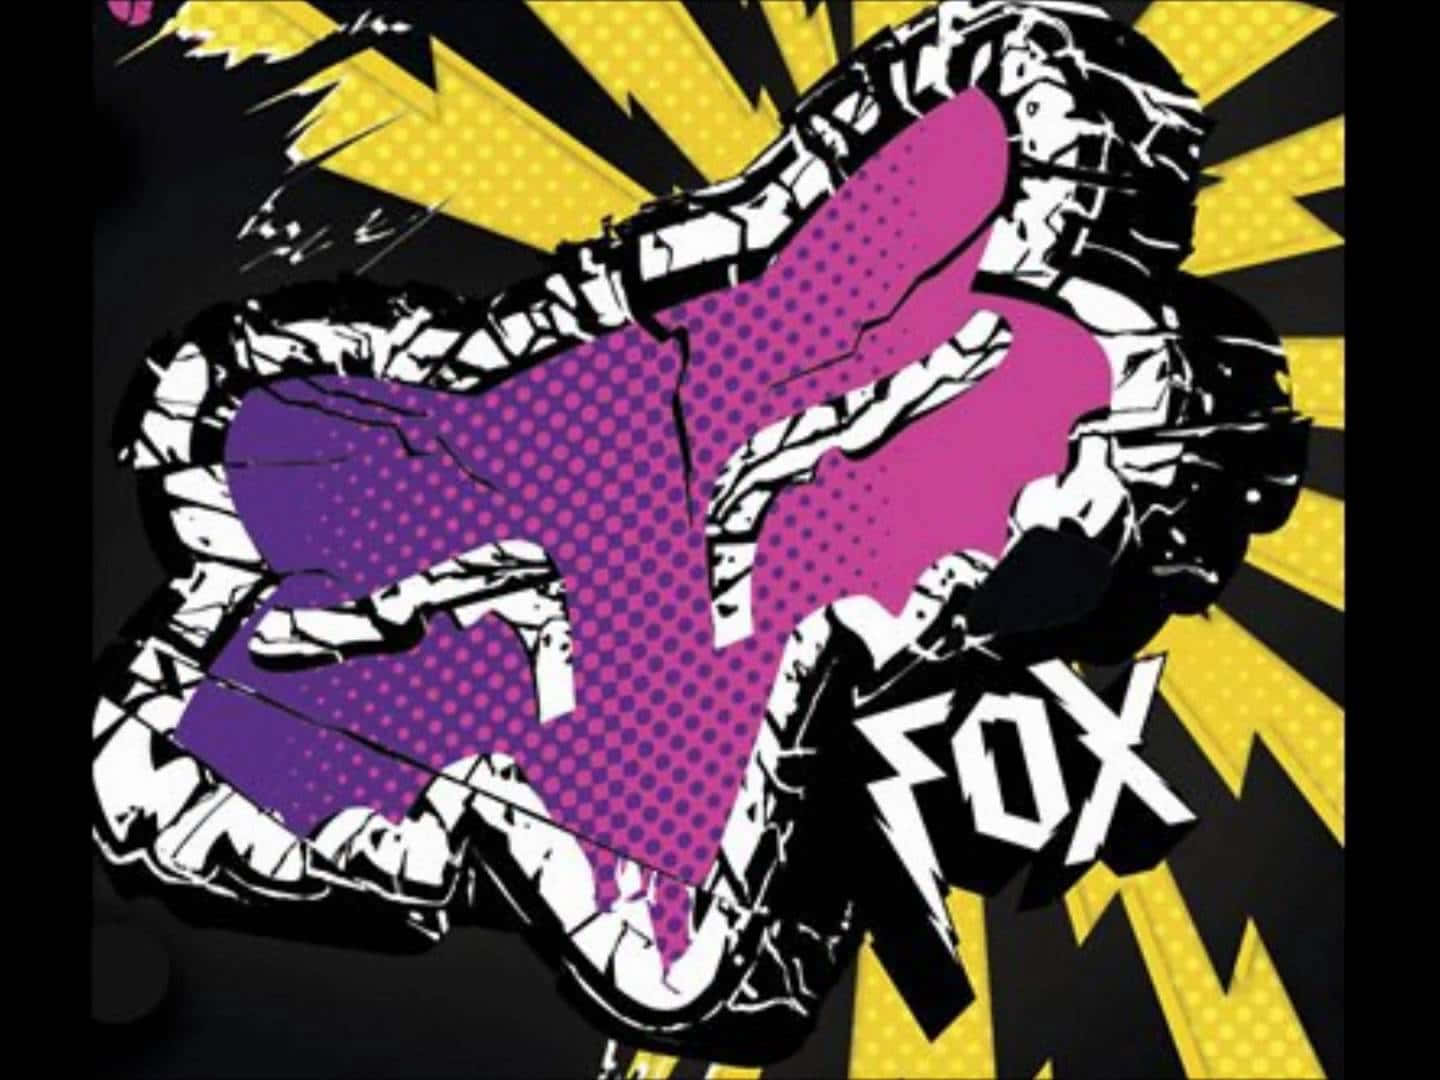 fox racing logo wallpaper